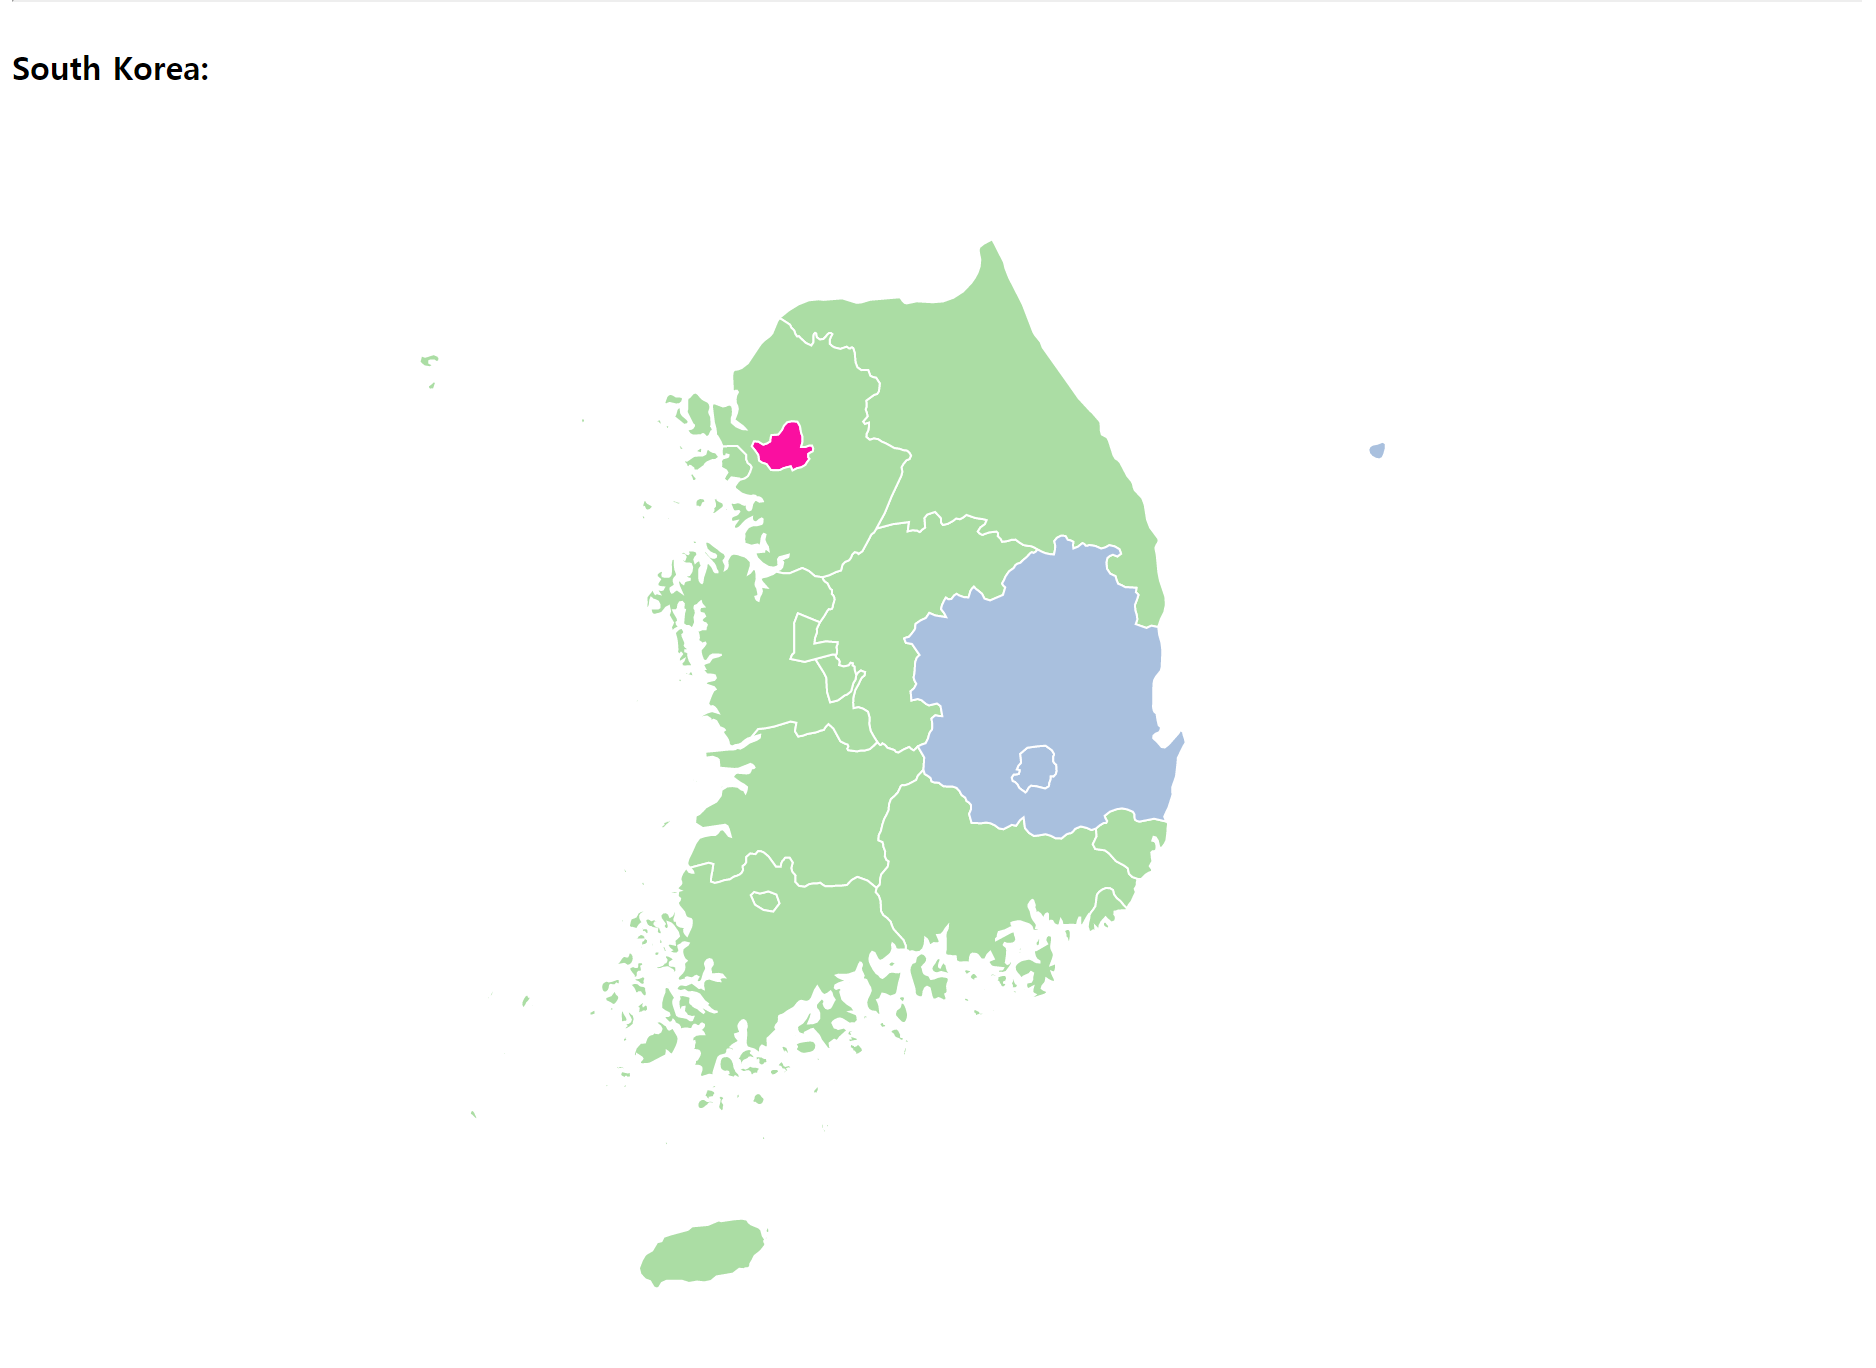 vue-datamaps-demo-south-korea.png